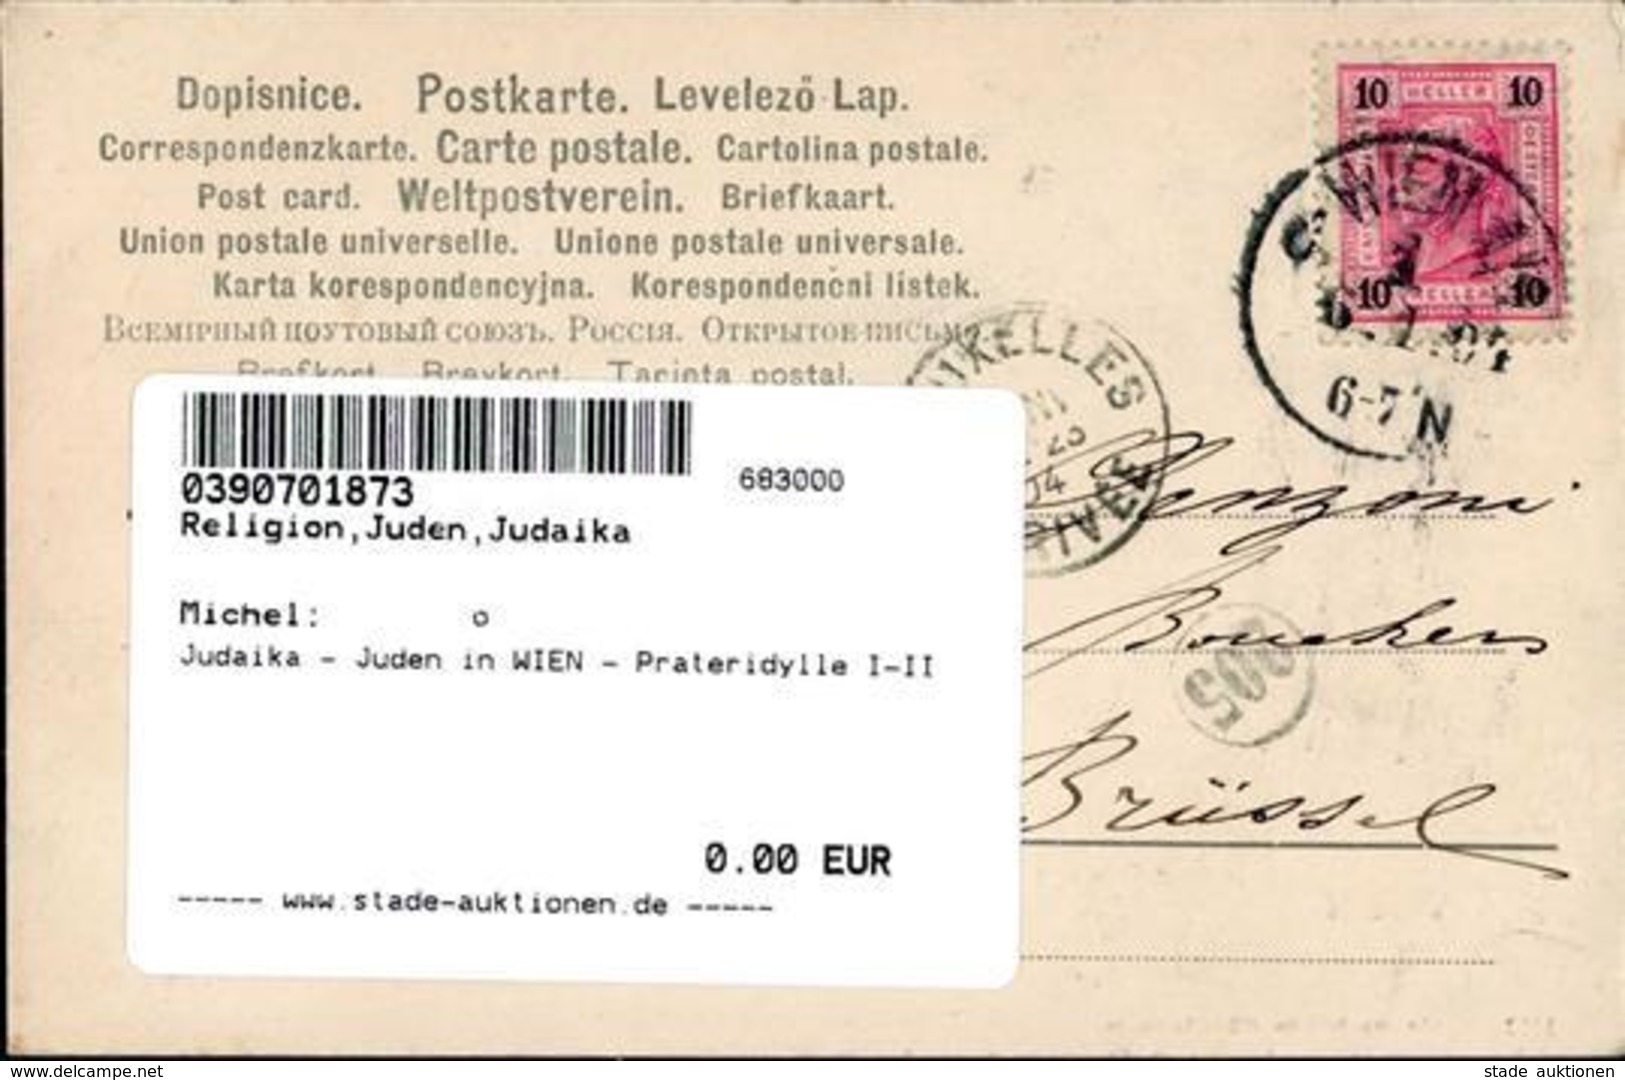 Judaika - Juden In WIEN - Prateridylle I-II Judaisme - Jewish